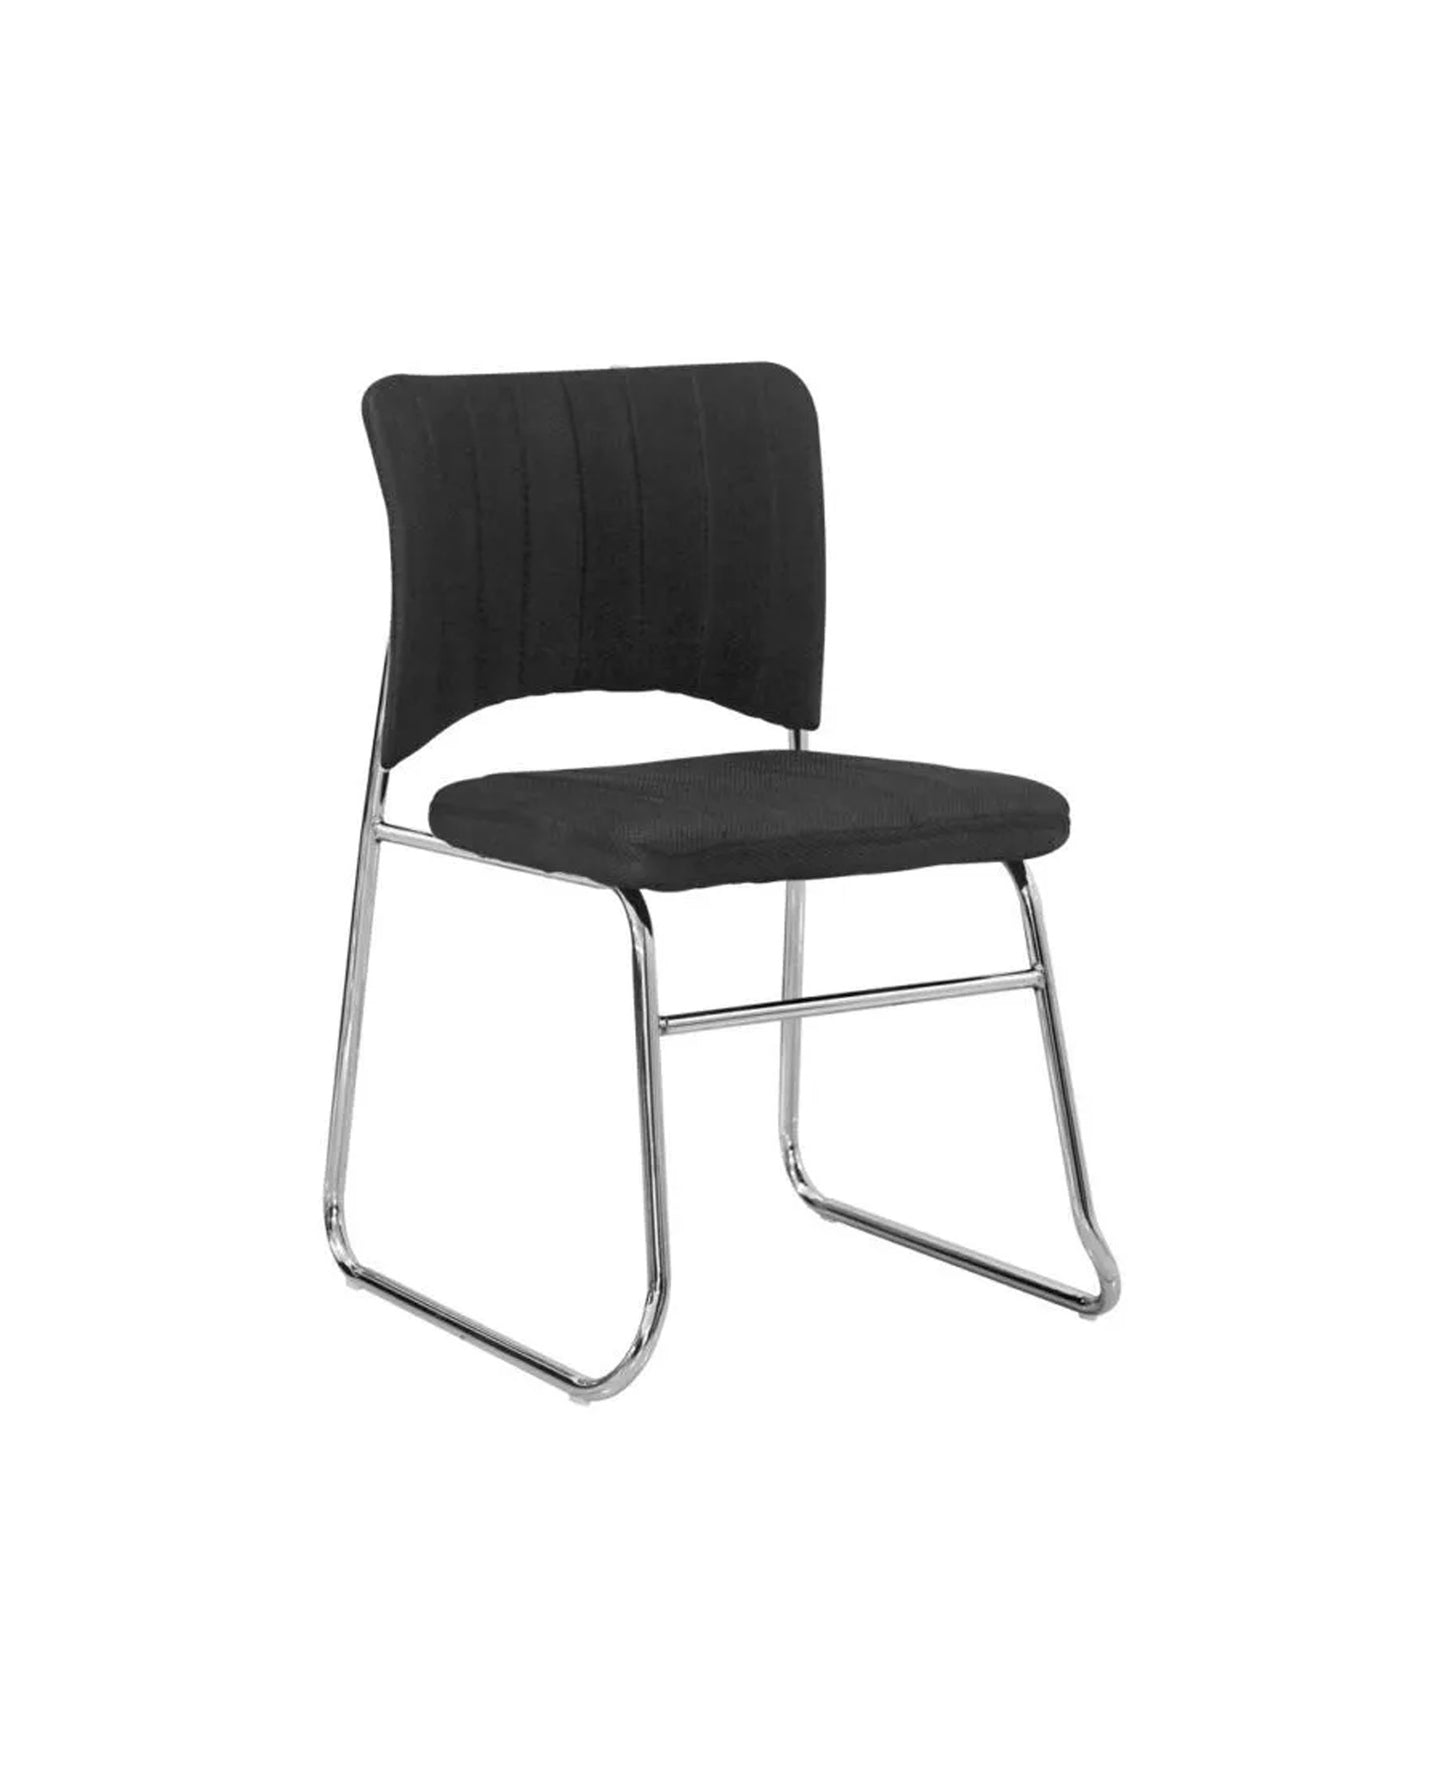 MW-A24 Office Chair Curved Back Chrome Frame